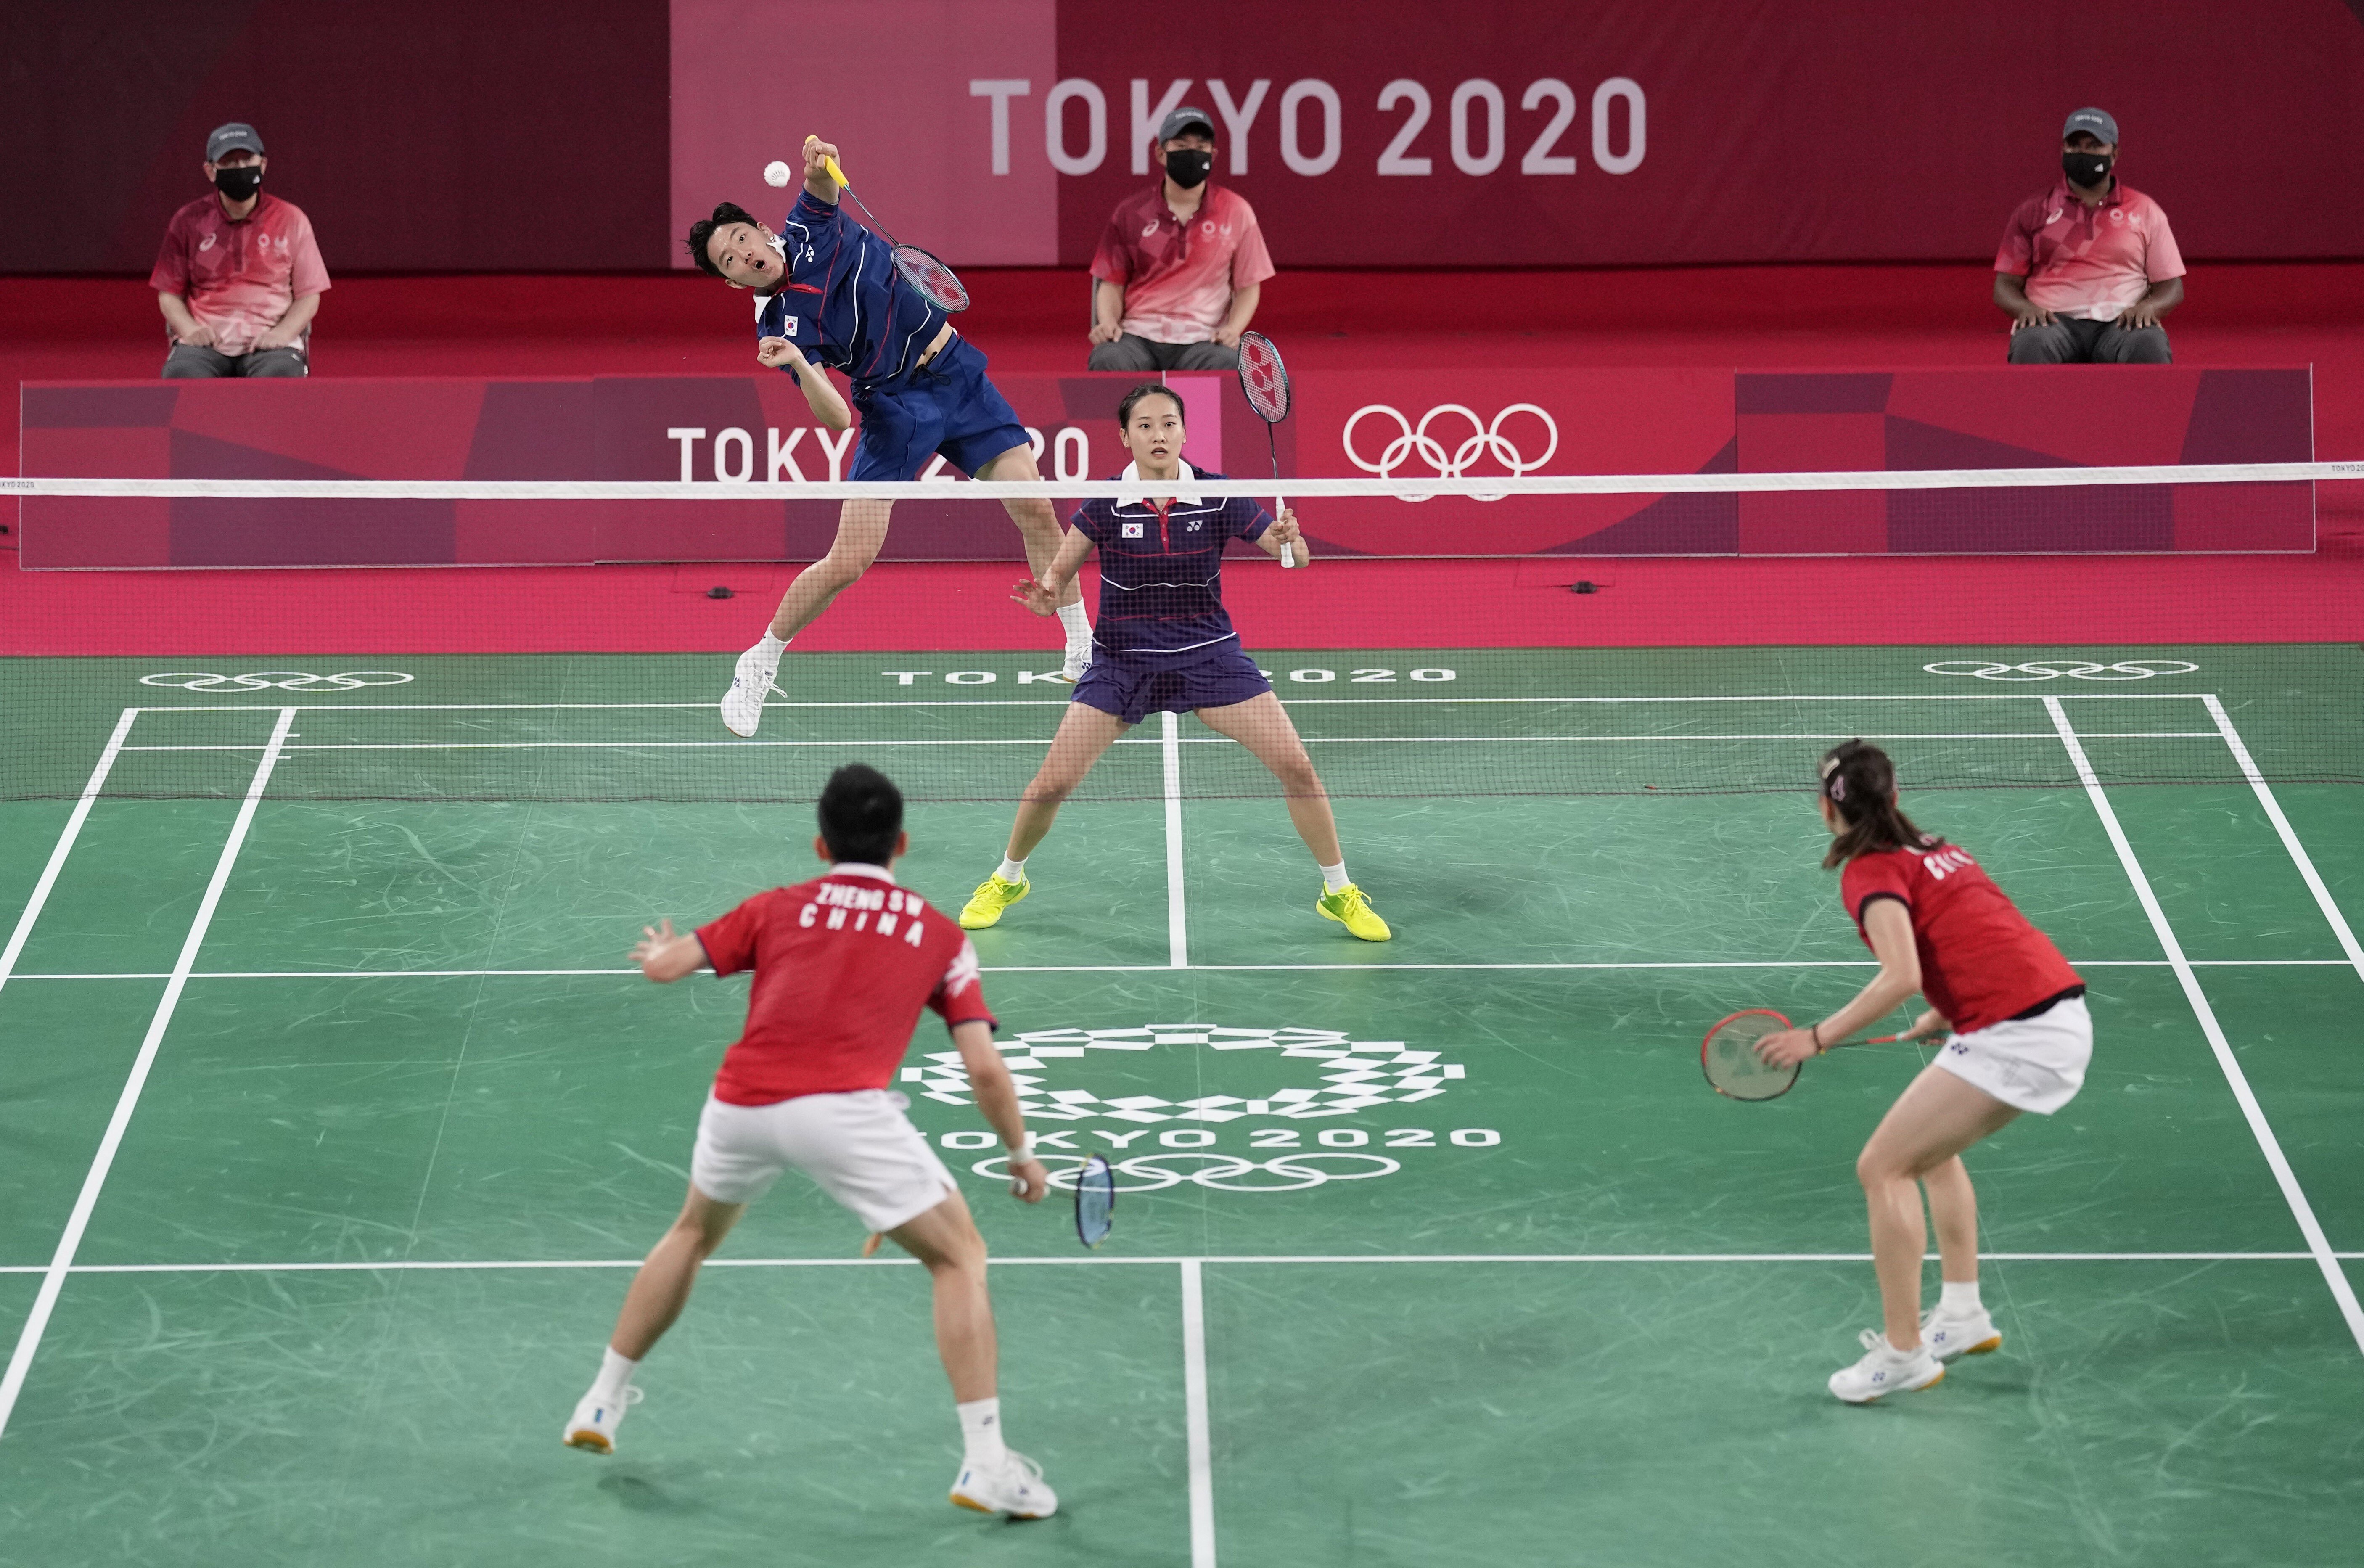 Badminton olimpik Olympic Badminton: